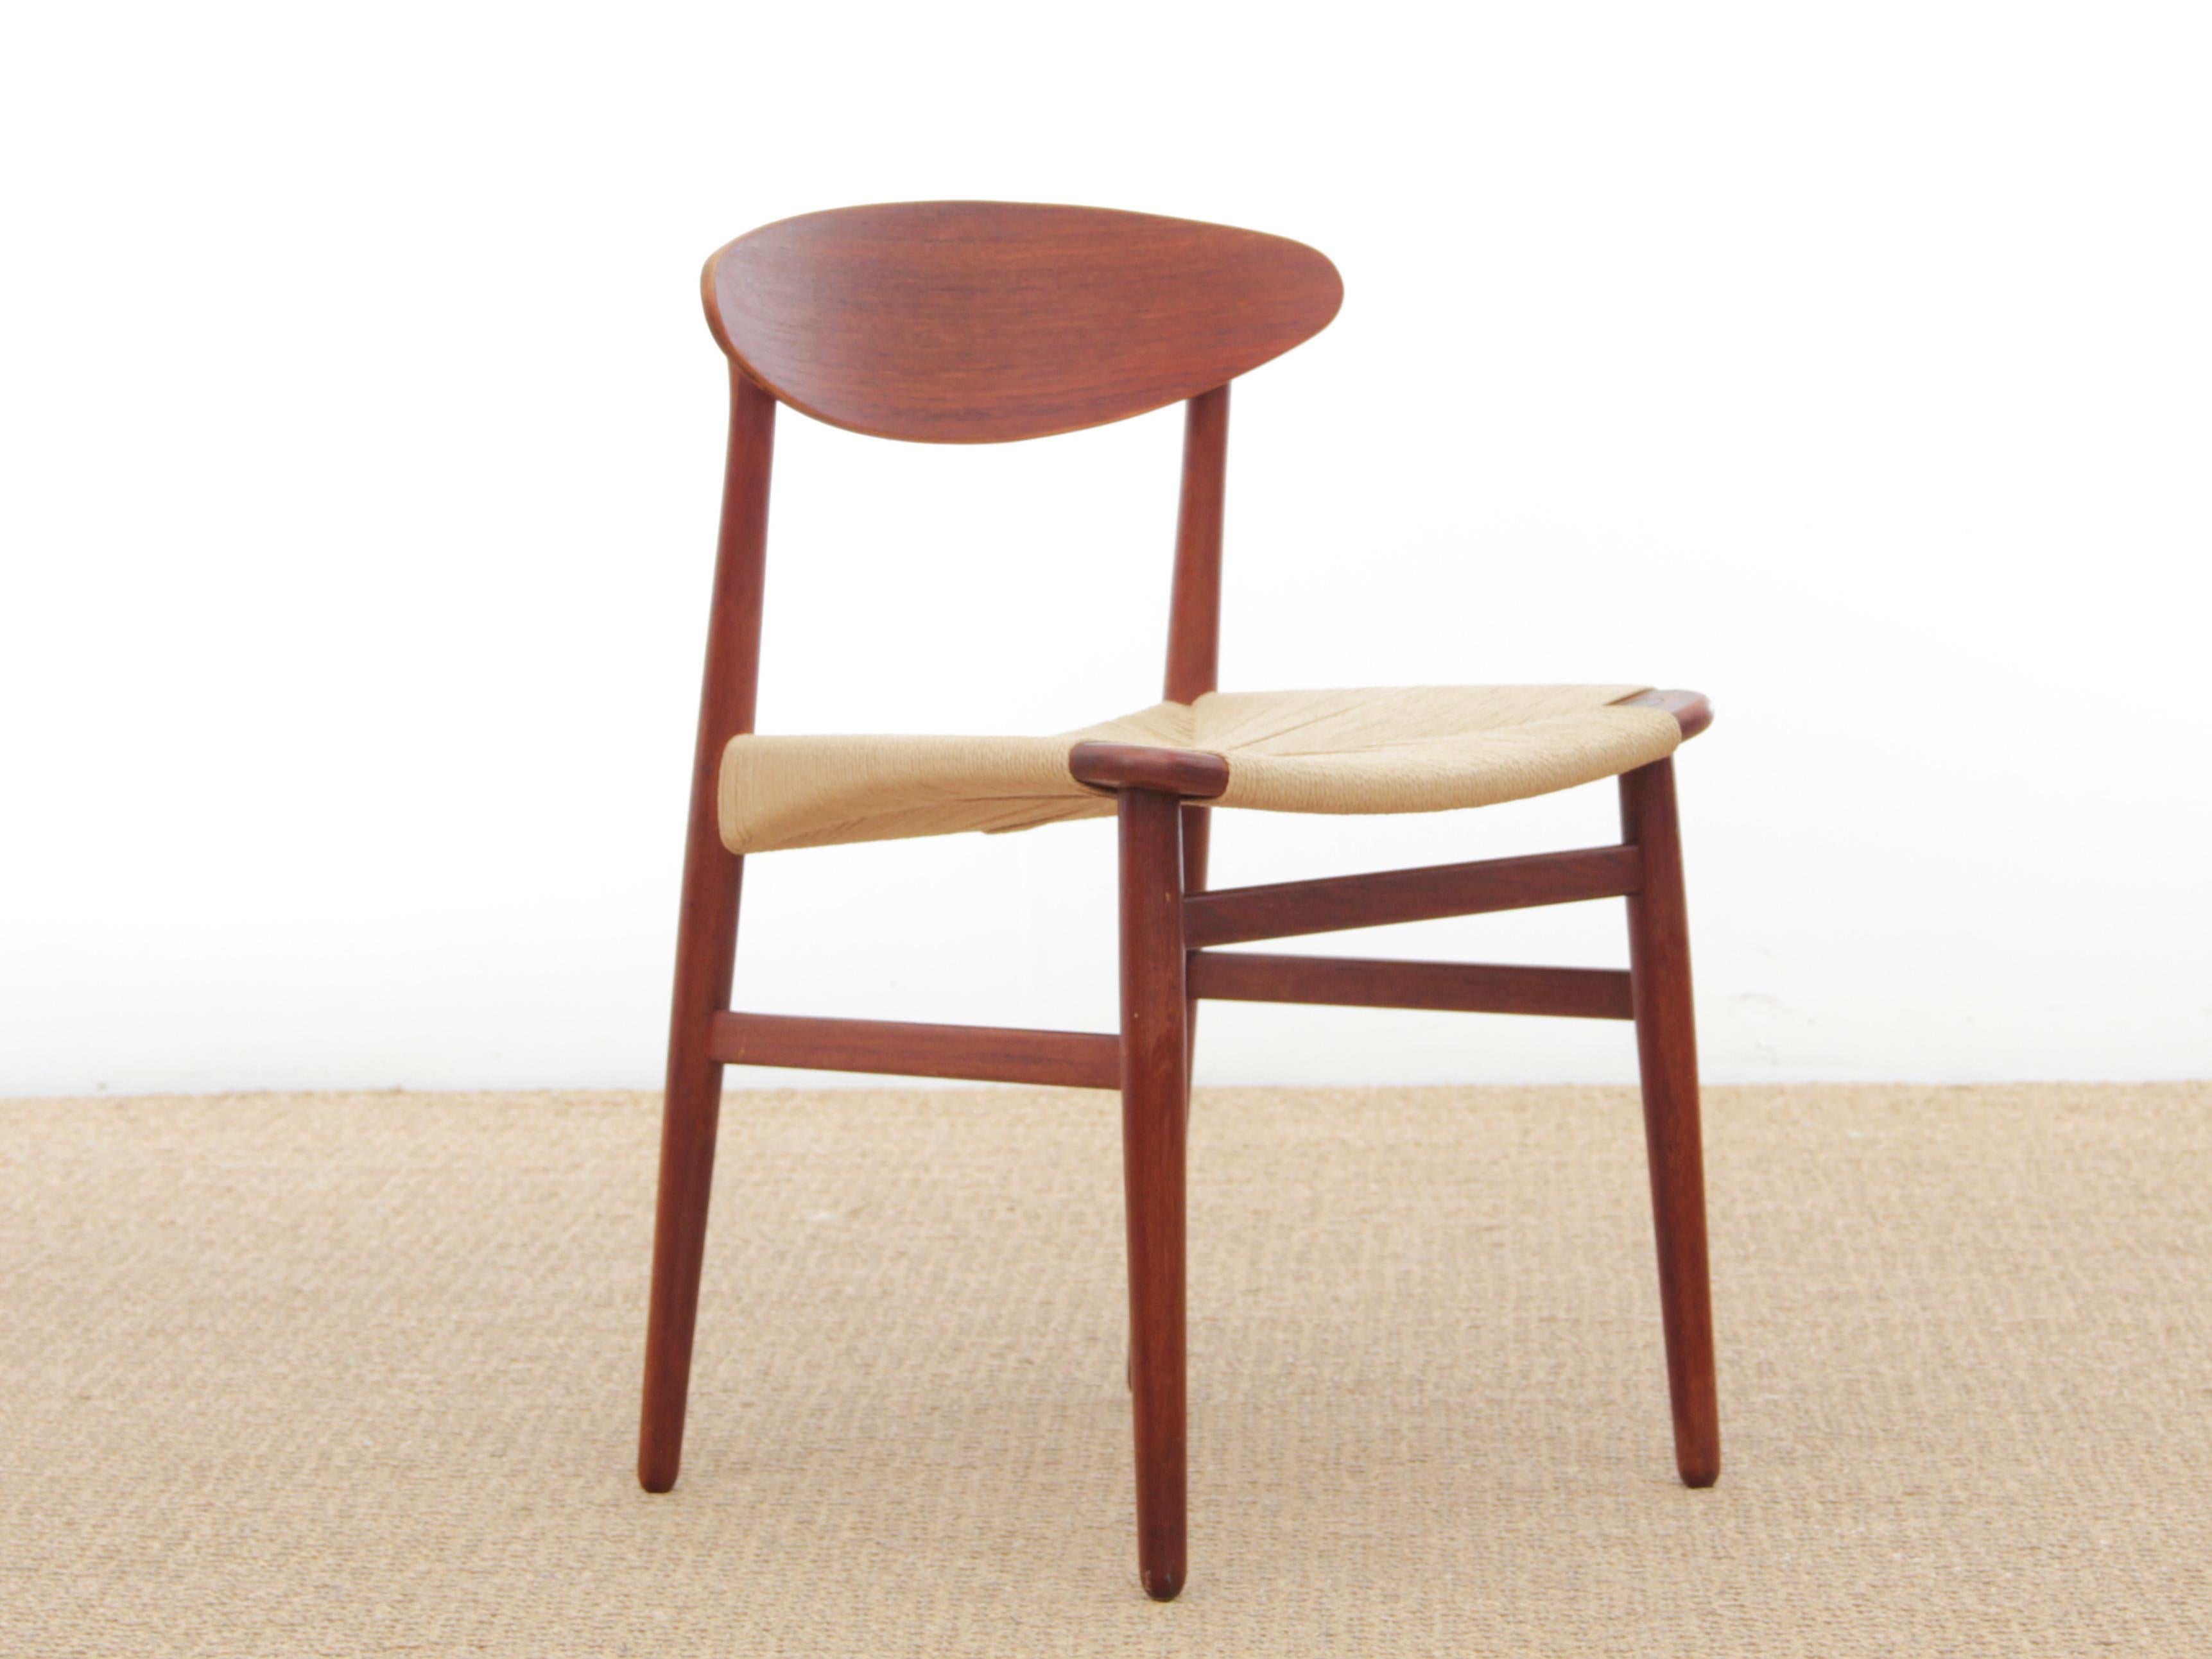 Scandinavian Modern Mid-Century Modern Scandinavian Set of 4 Chairs by Aksel Bender Madsen For Sale